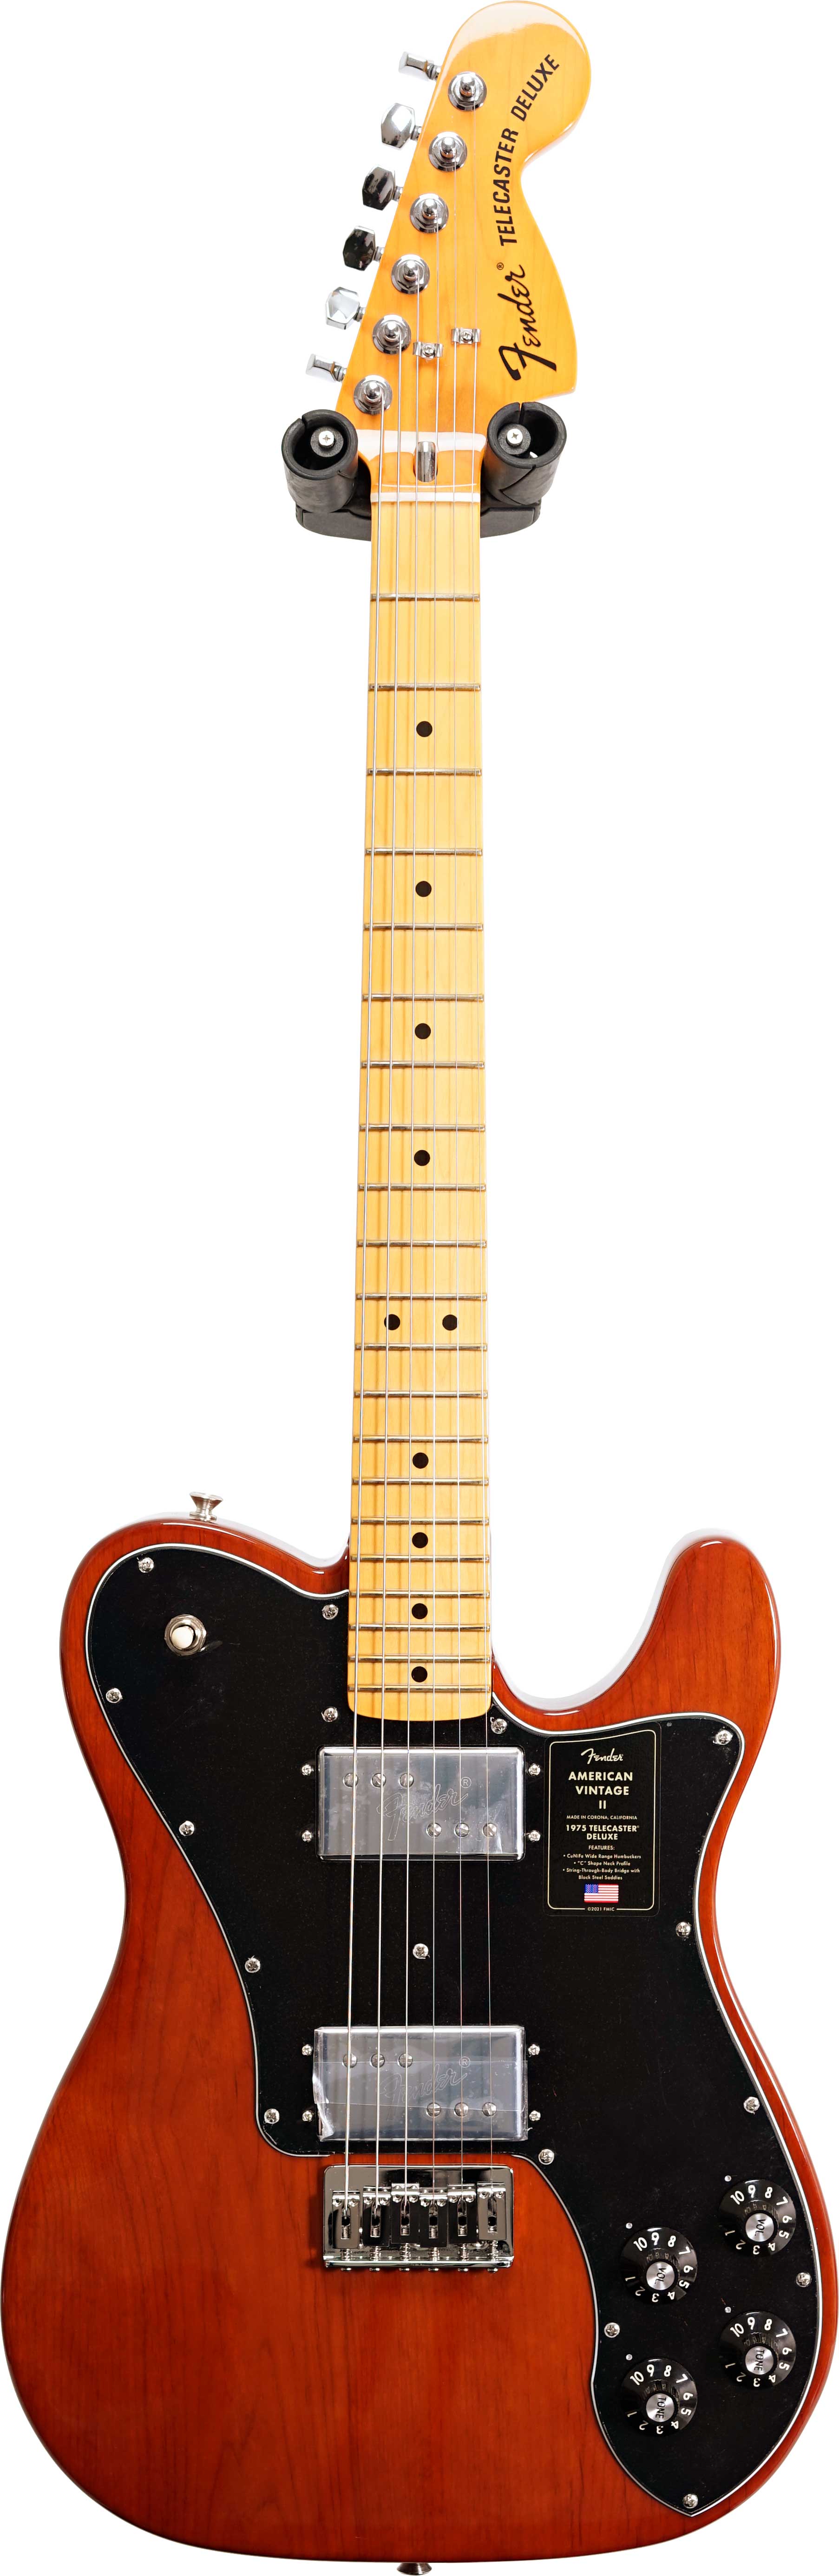 Fender American vintage telecaster 50’s